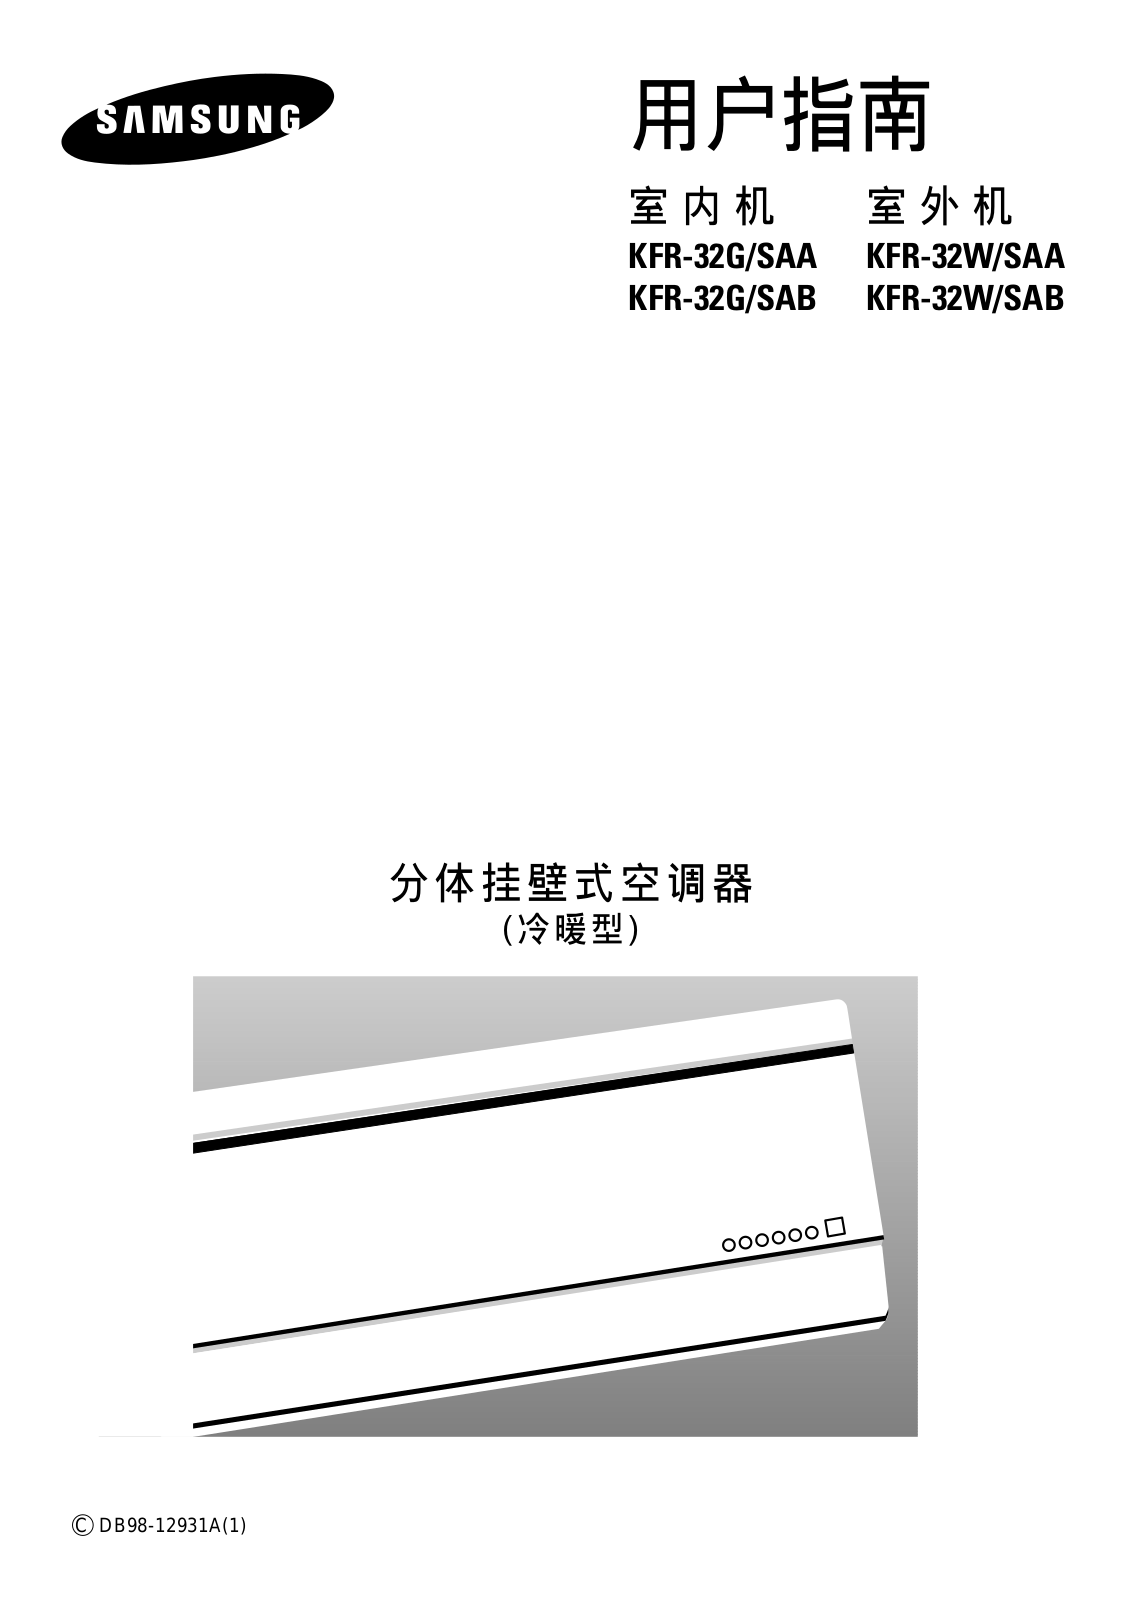 Samsung KFR-35W, KFR32G/SAA, KFR32G/SAB, KFR-35GW, KFR-35G User Manual